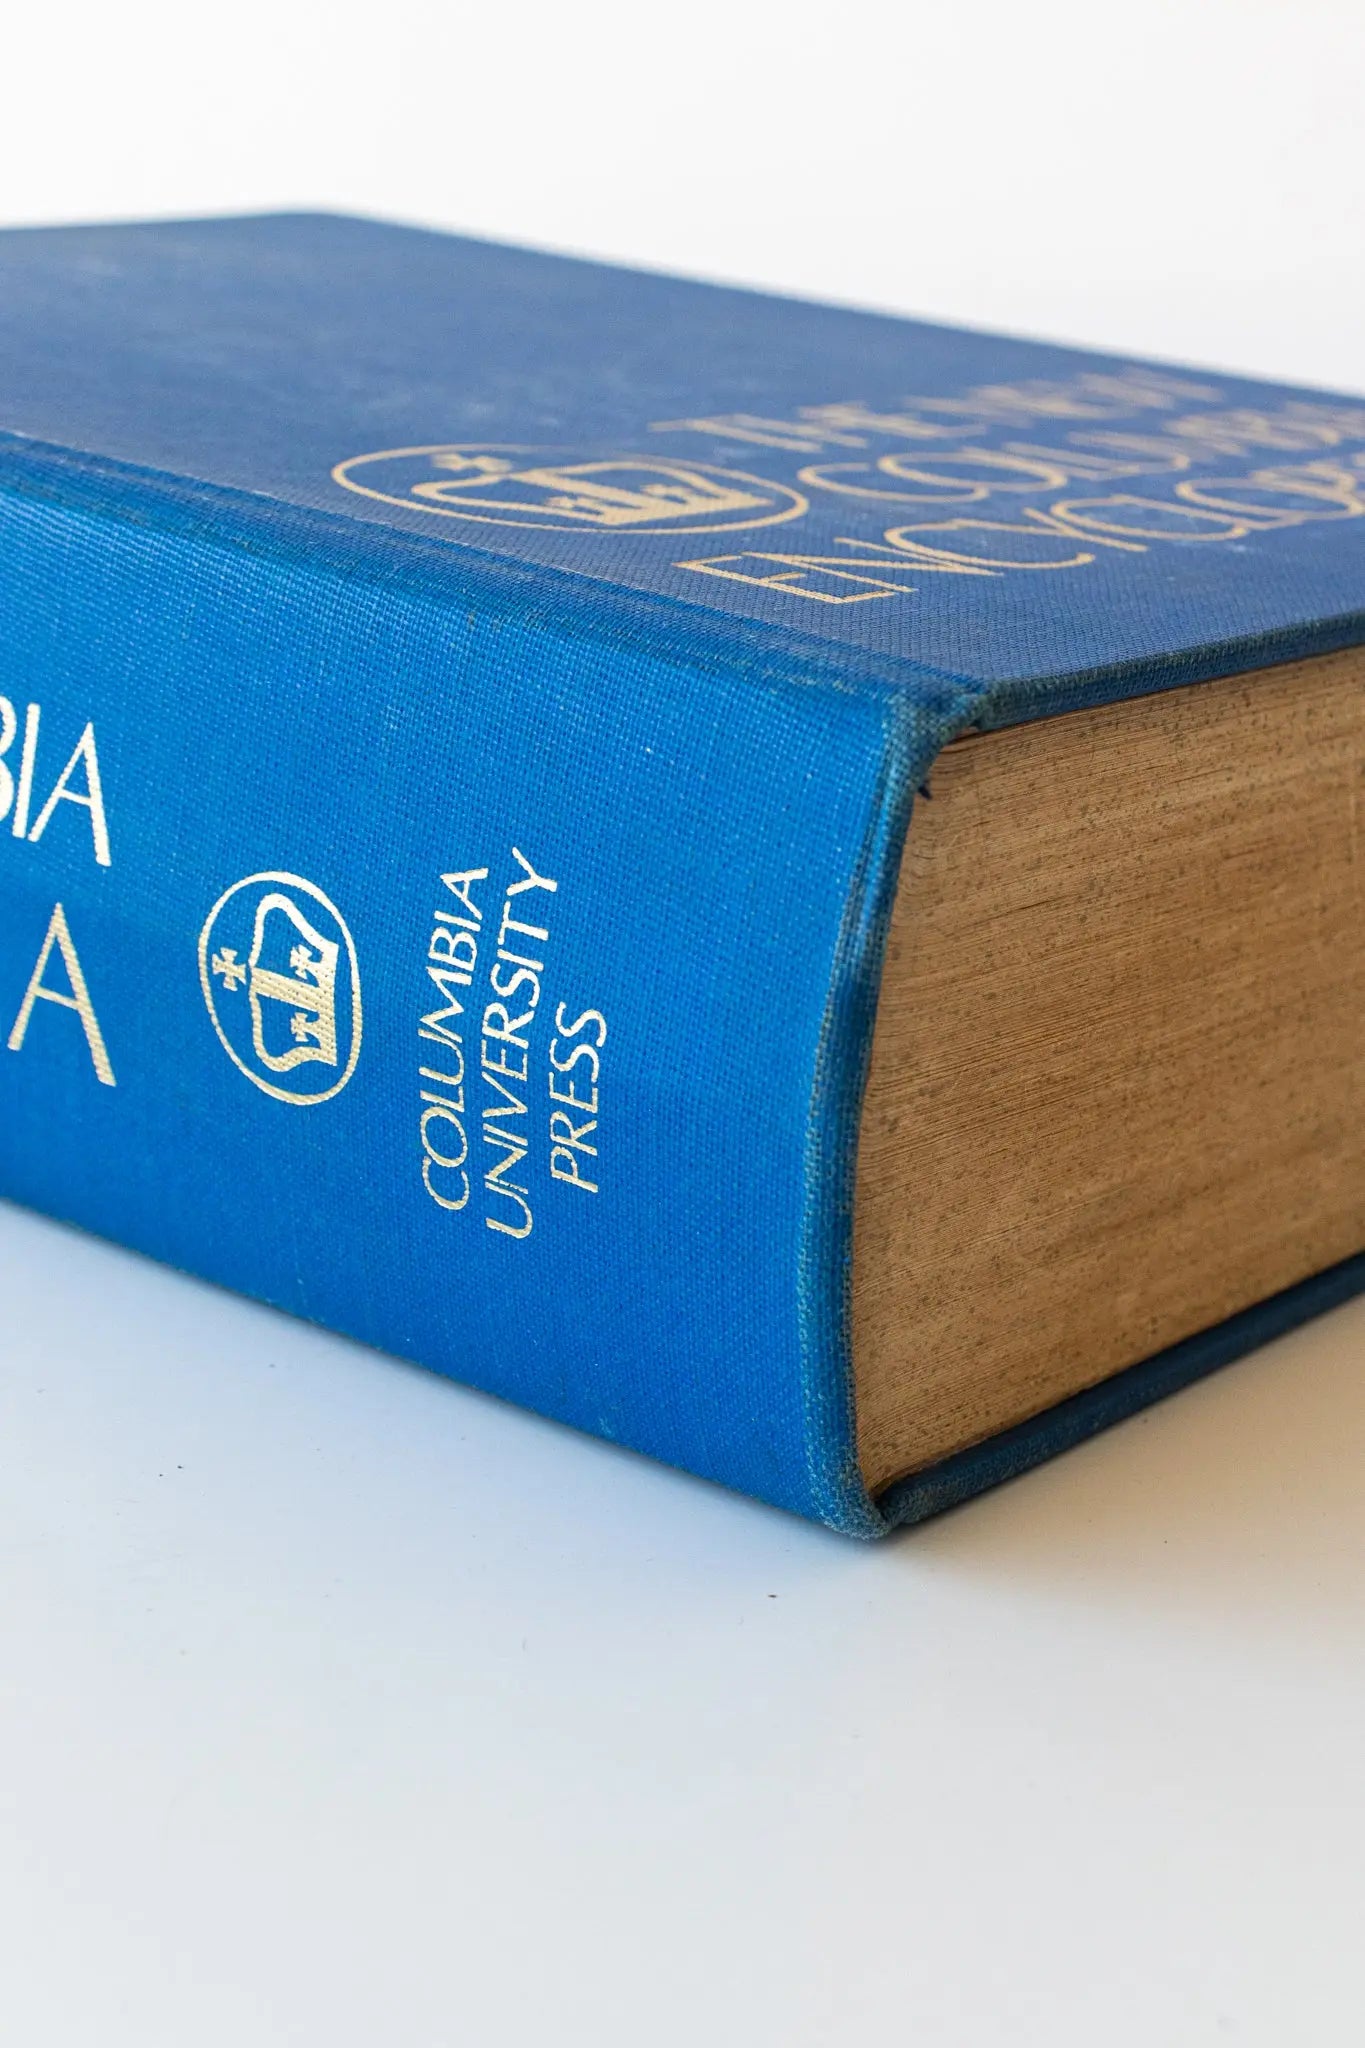 The New Columbia Encyclopedia